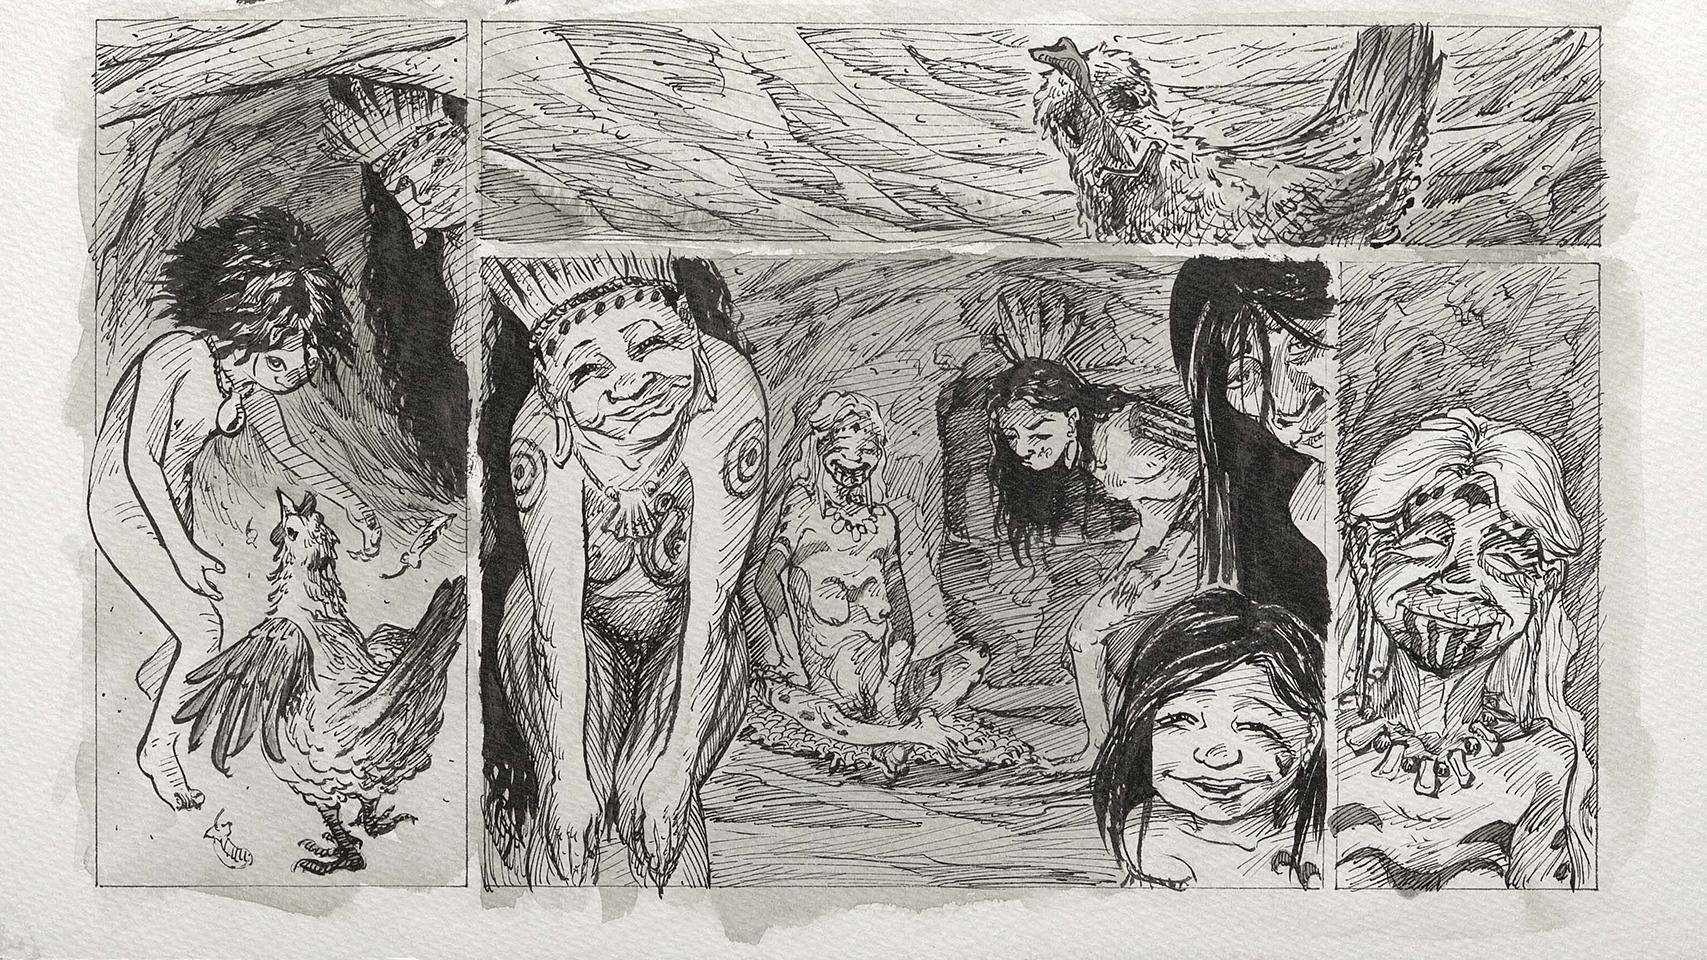 Ilustraciones para la novela gráfica "Varua Rapa Nui"